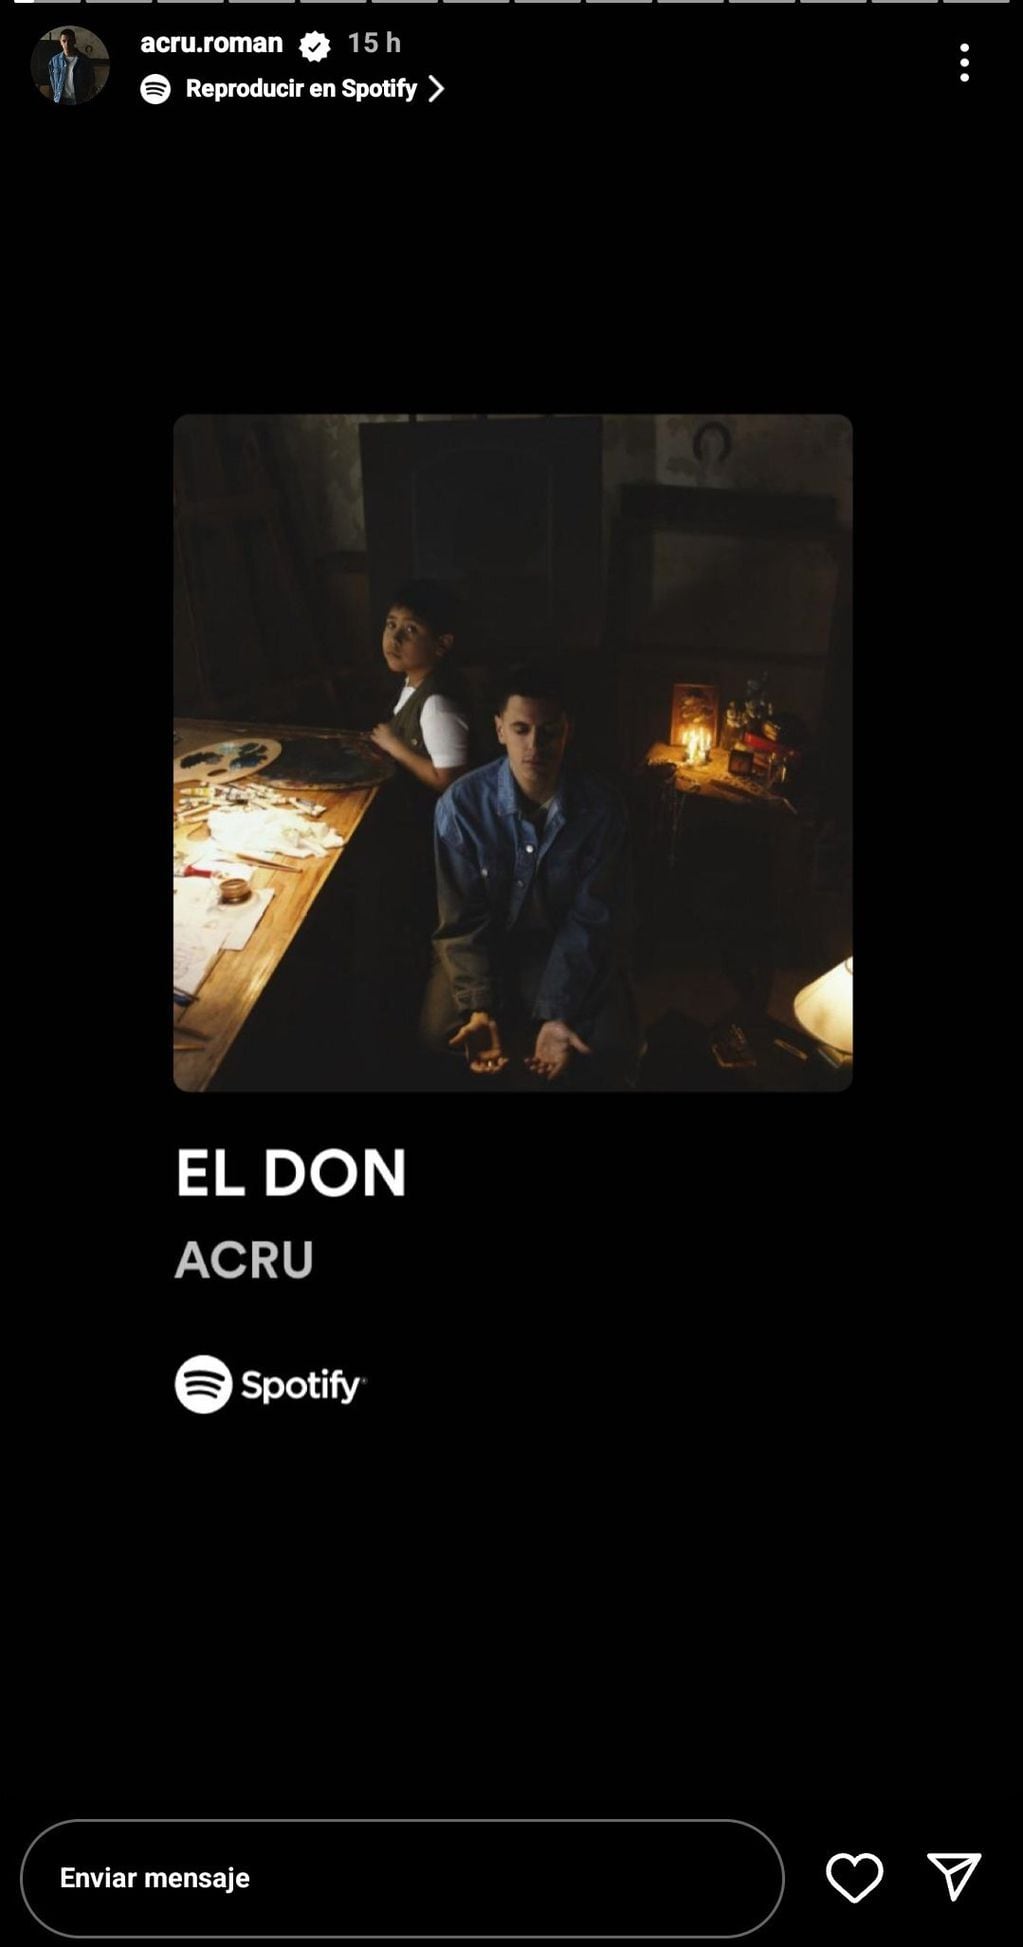 La portada del álbum "El Don" de Acru.